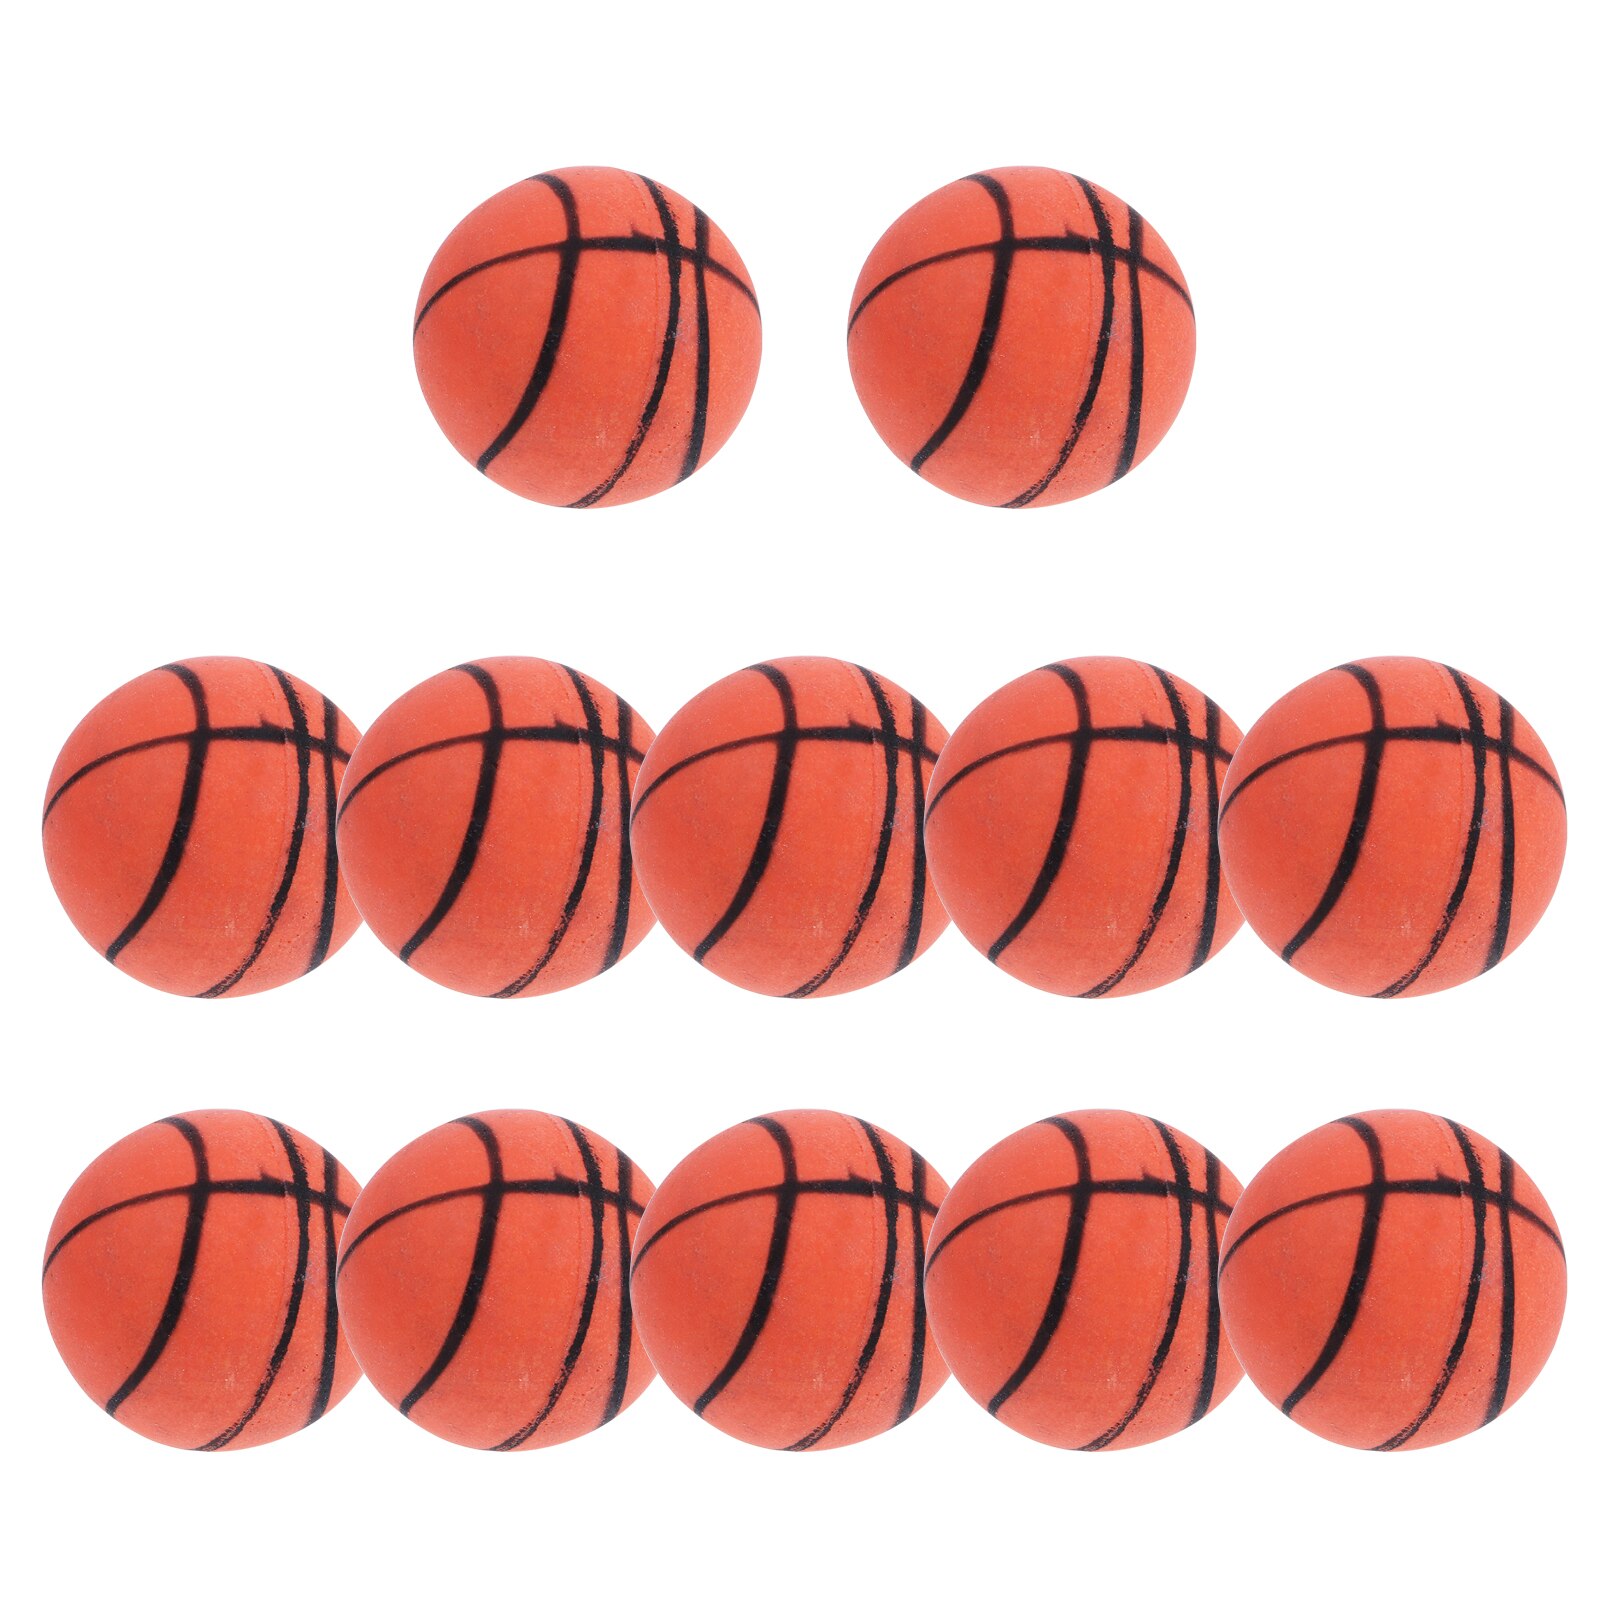 12 Stks/partij Elastische Rubber Kleine Mini Basketbal Bounce Pop Diy Sport Bal Plezier Indoor Sport Ouder-kind Games